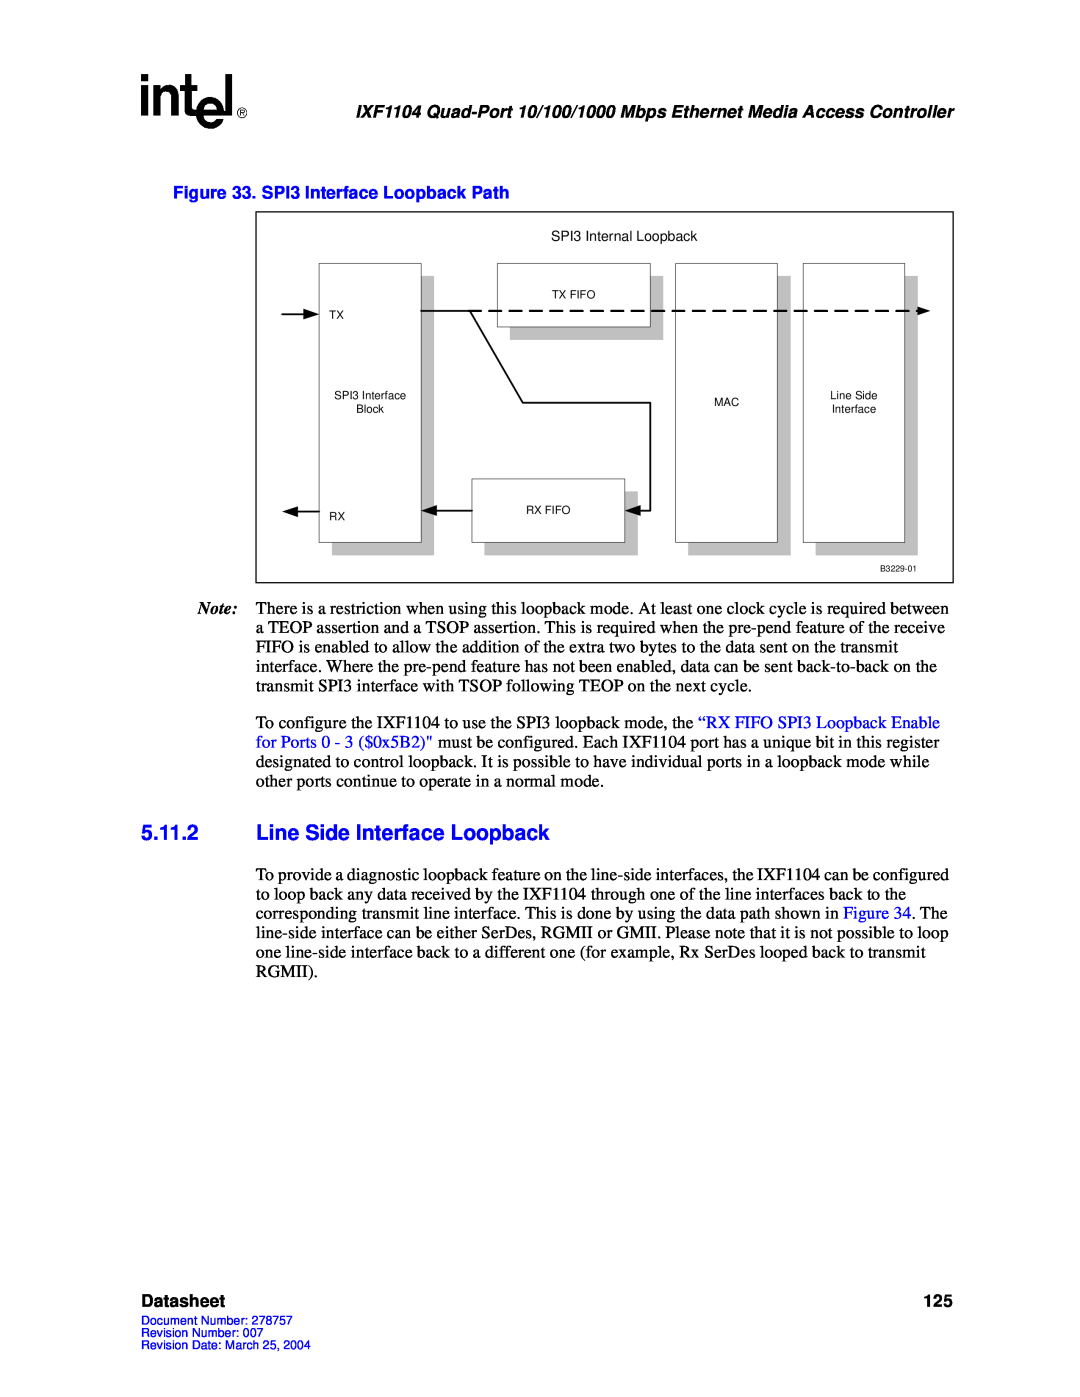 Intel IXF1104 manual 5.11.2Line Side Interface Loopback, Datasheet 